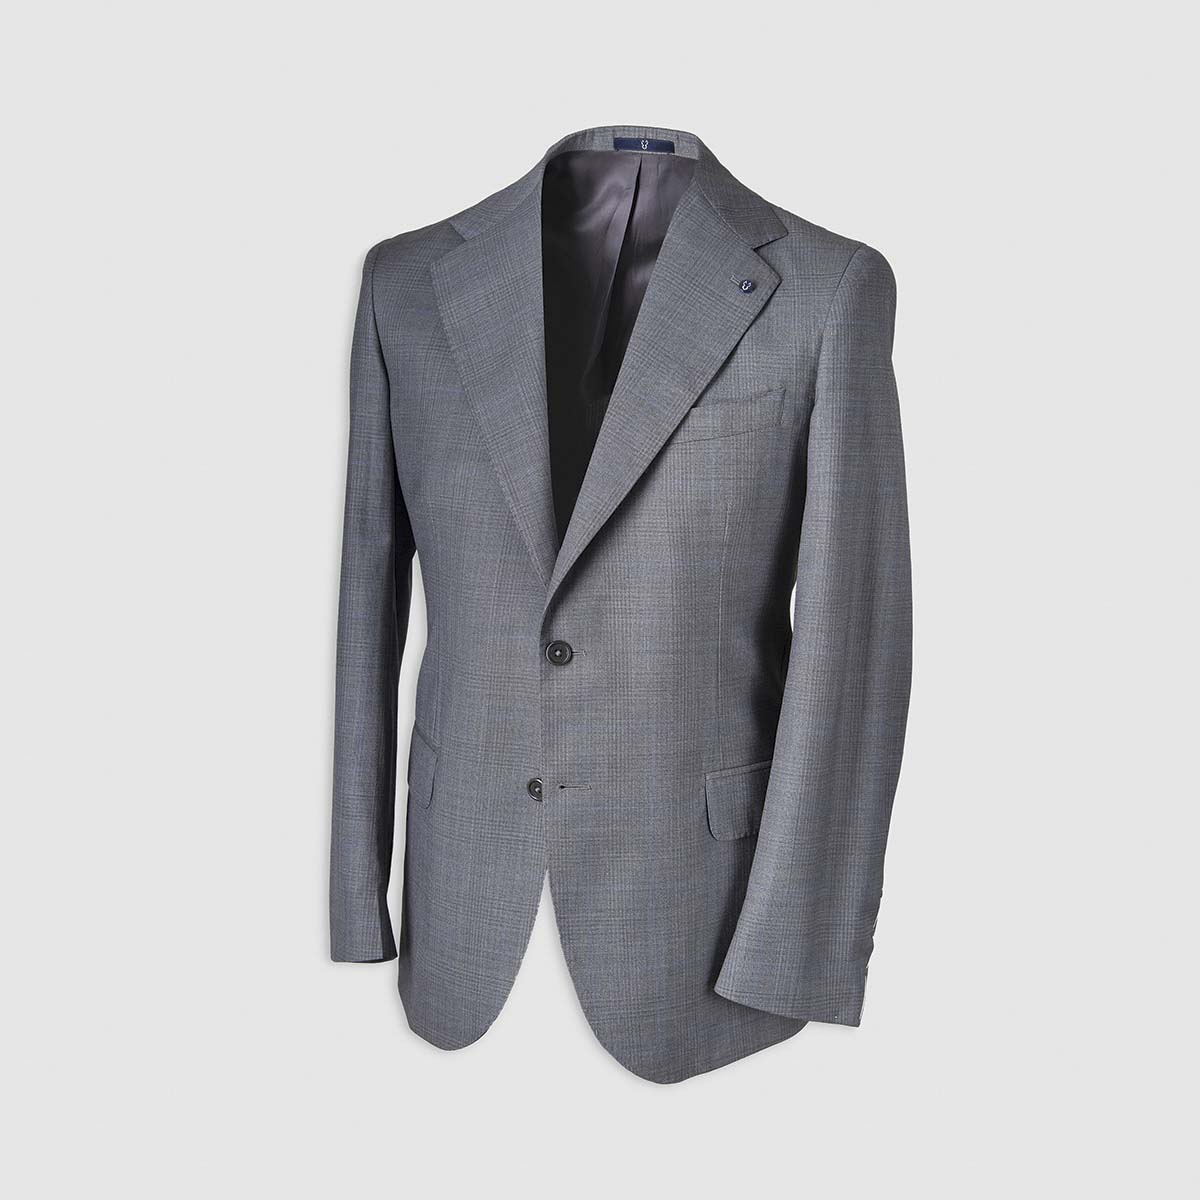 Grey Smart Suit in 130s Four Seasons Wool Melillo 1970 on sale 2022 2